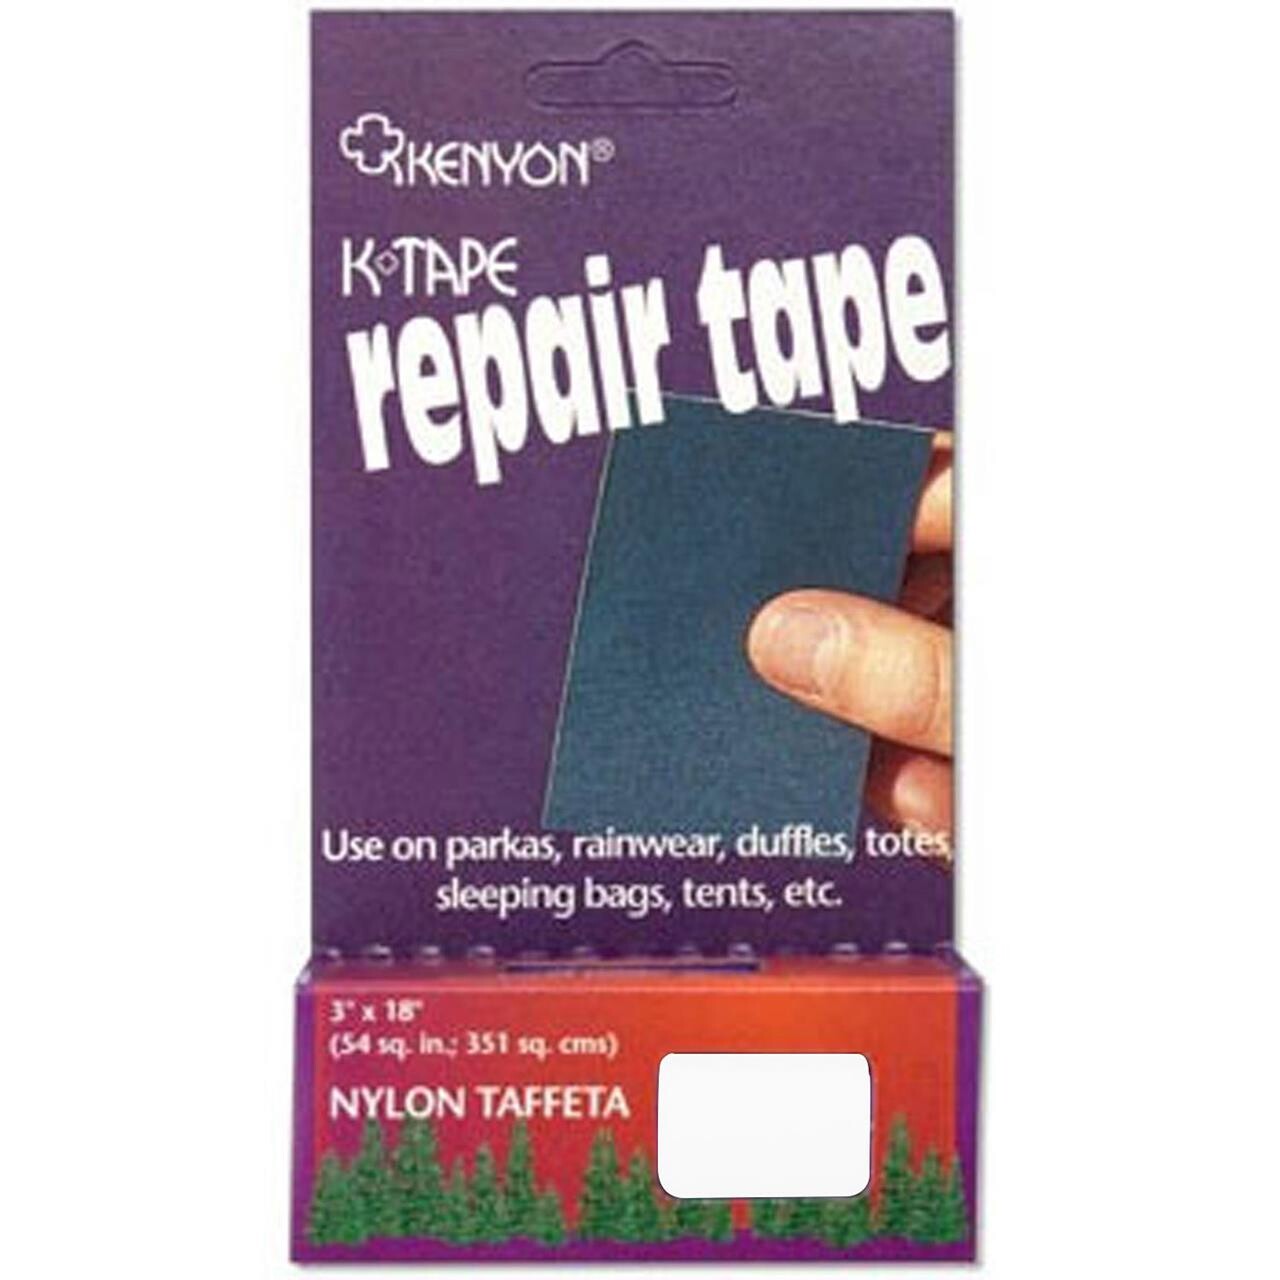 Kenyon Repair tape Ripstop 3x18" (Hvid (WHITE))